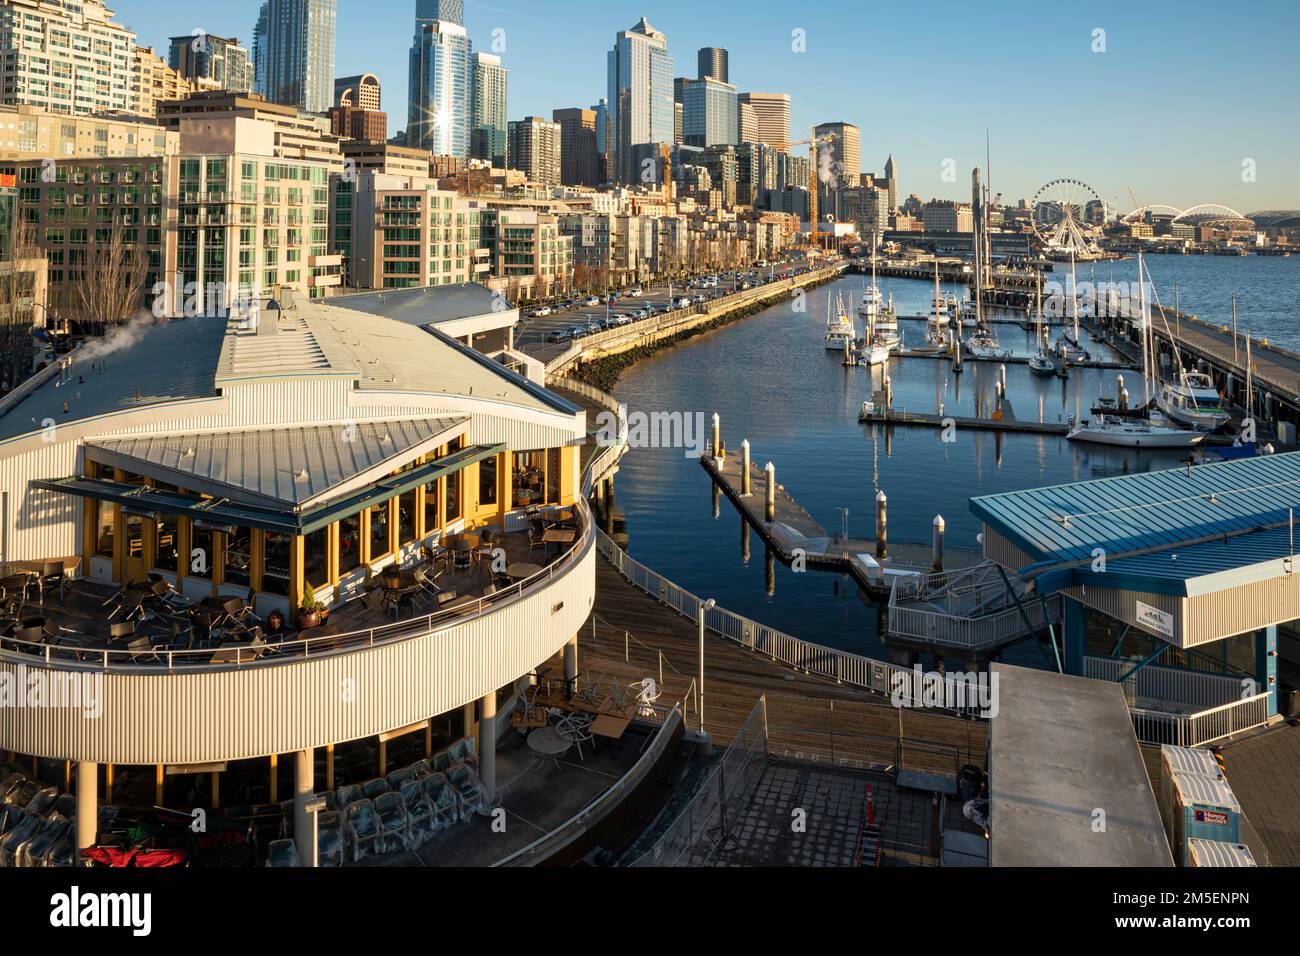 WA22864-00...WASHINGTON - The Seattle waterfront on Elliott Bay. Stock Photo